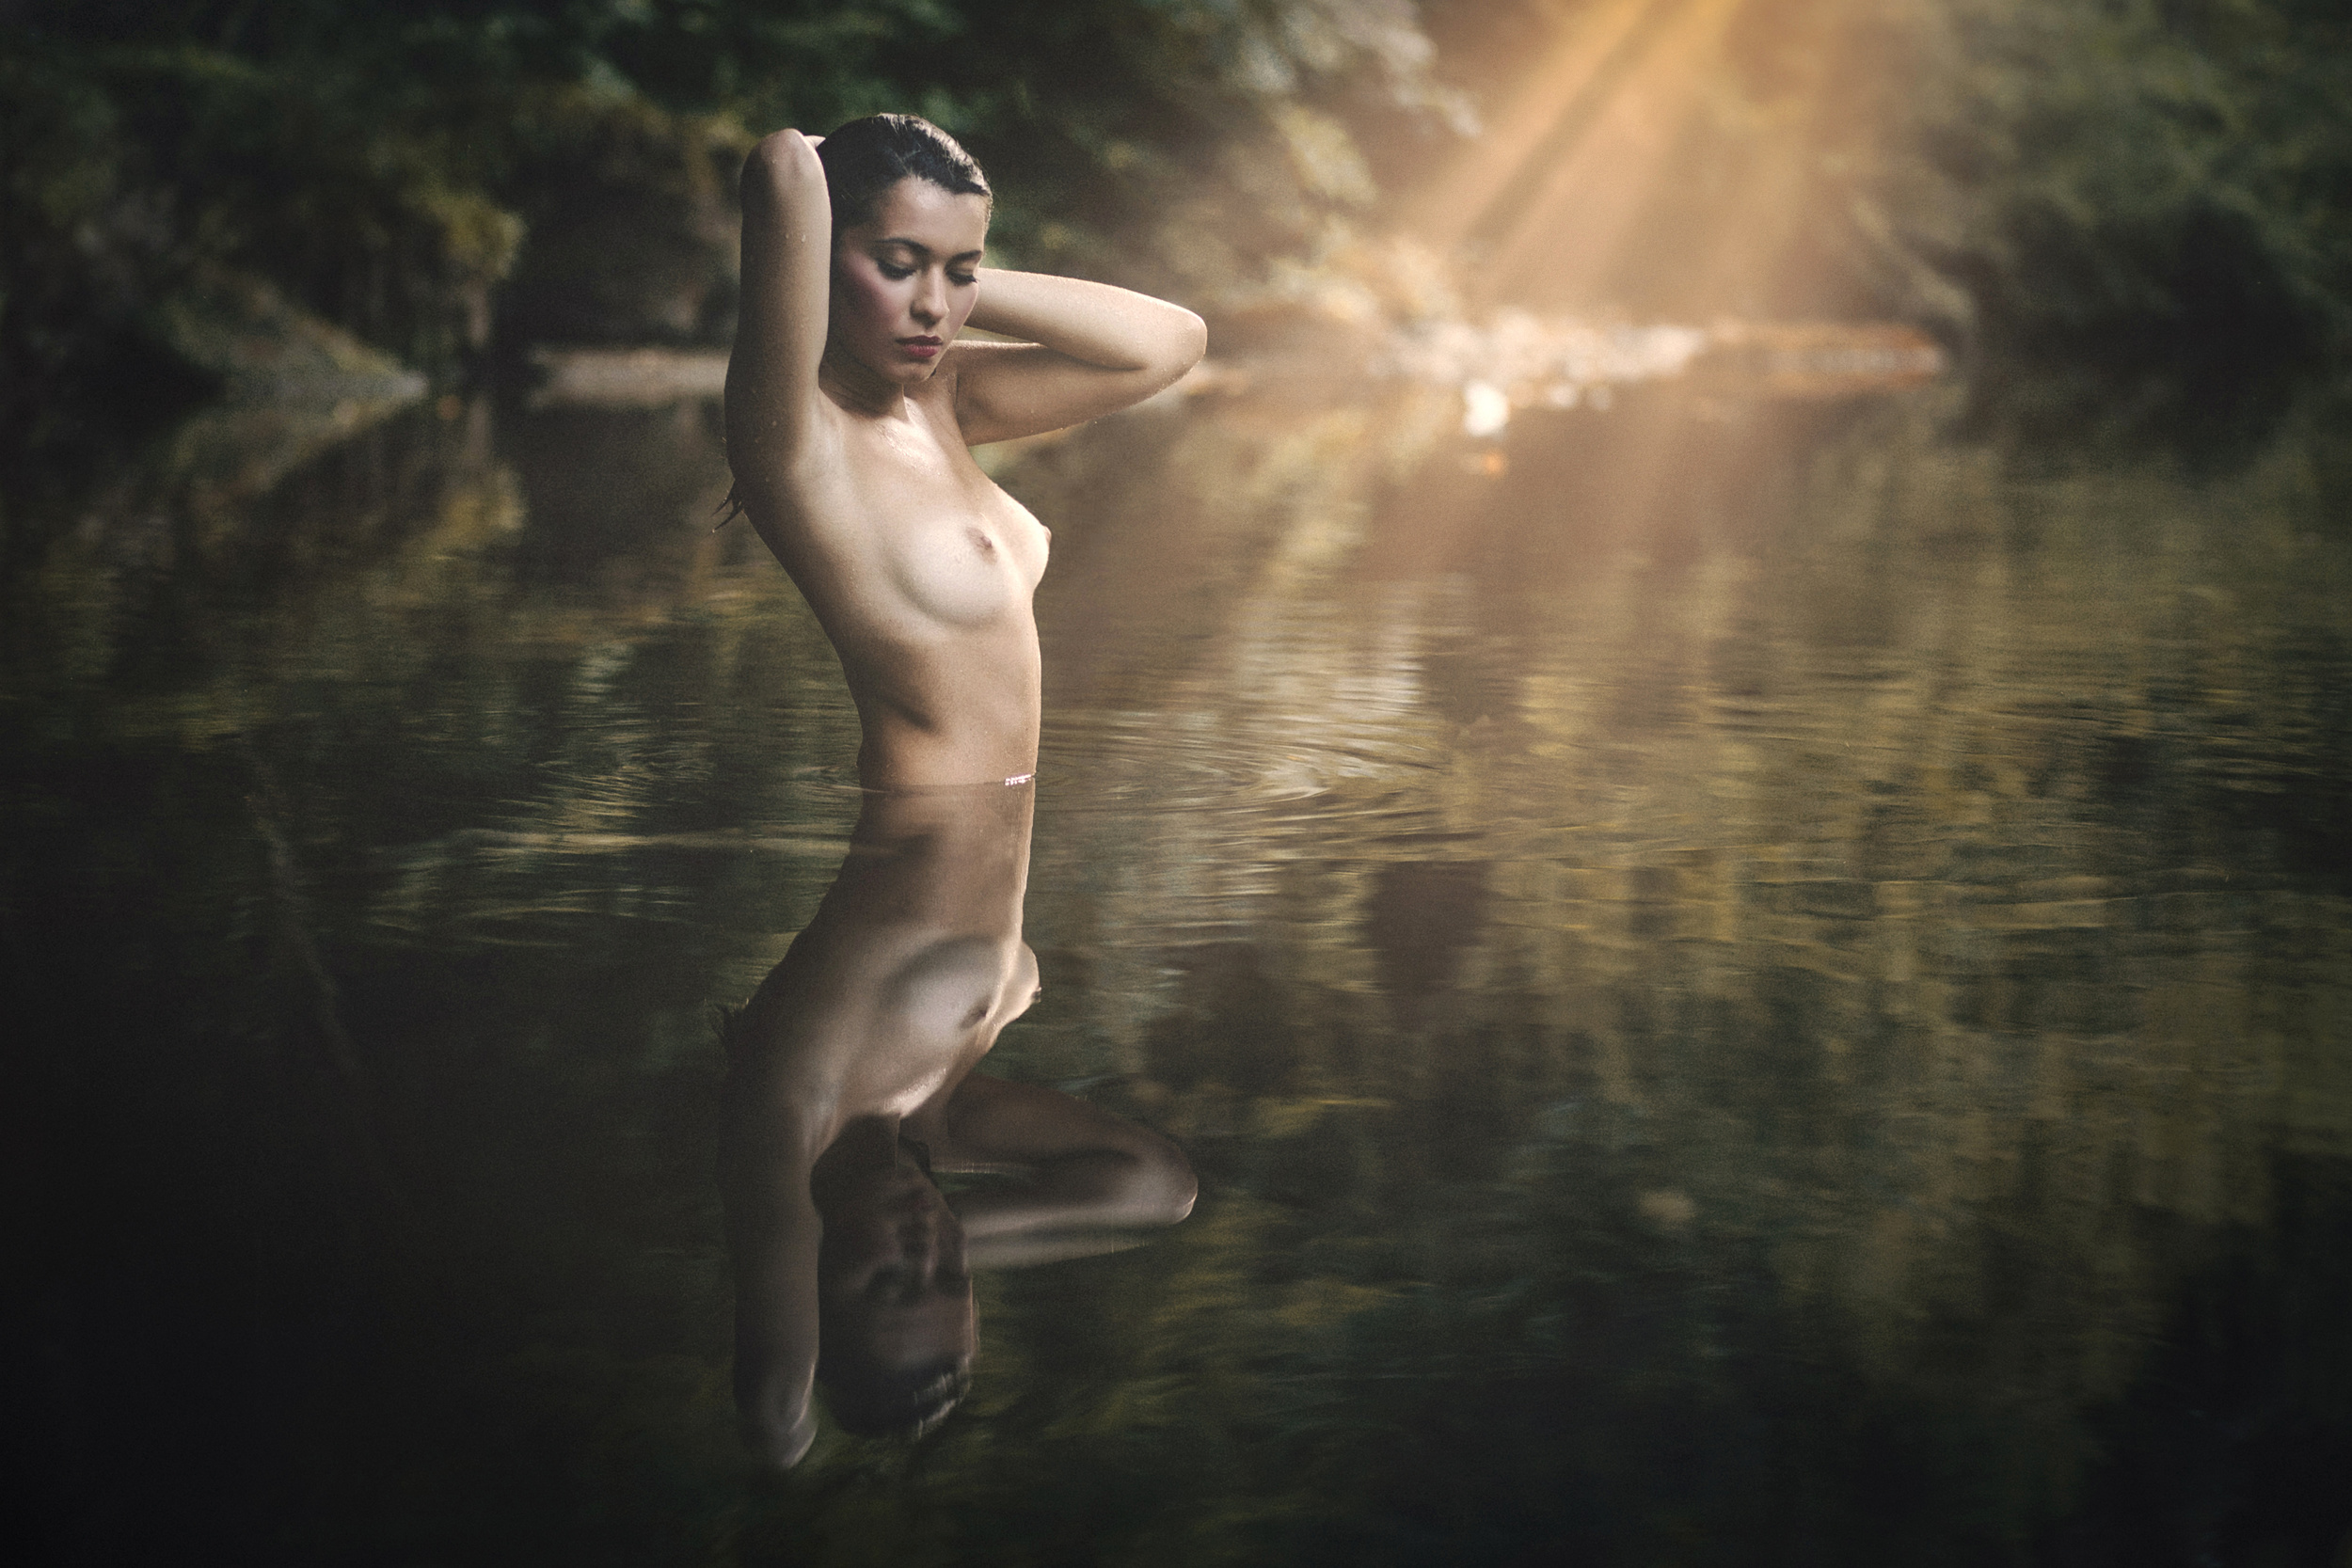 Alessandro arthur - nude photos